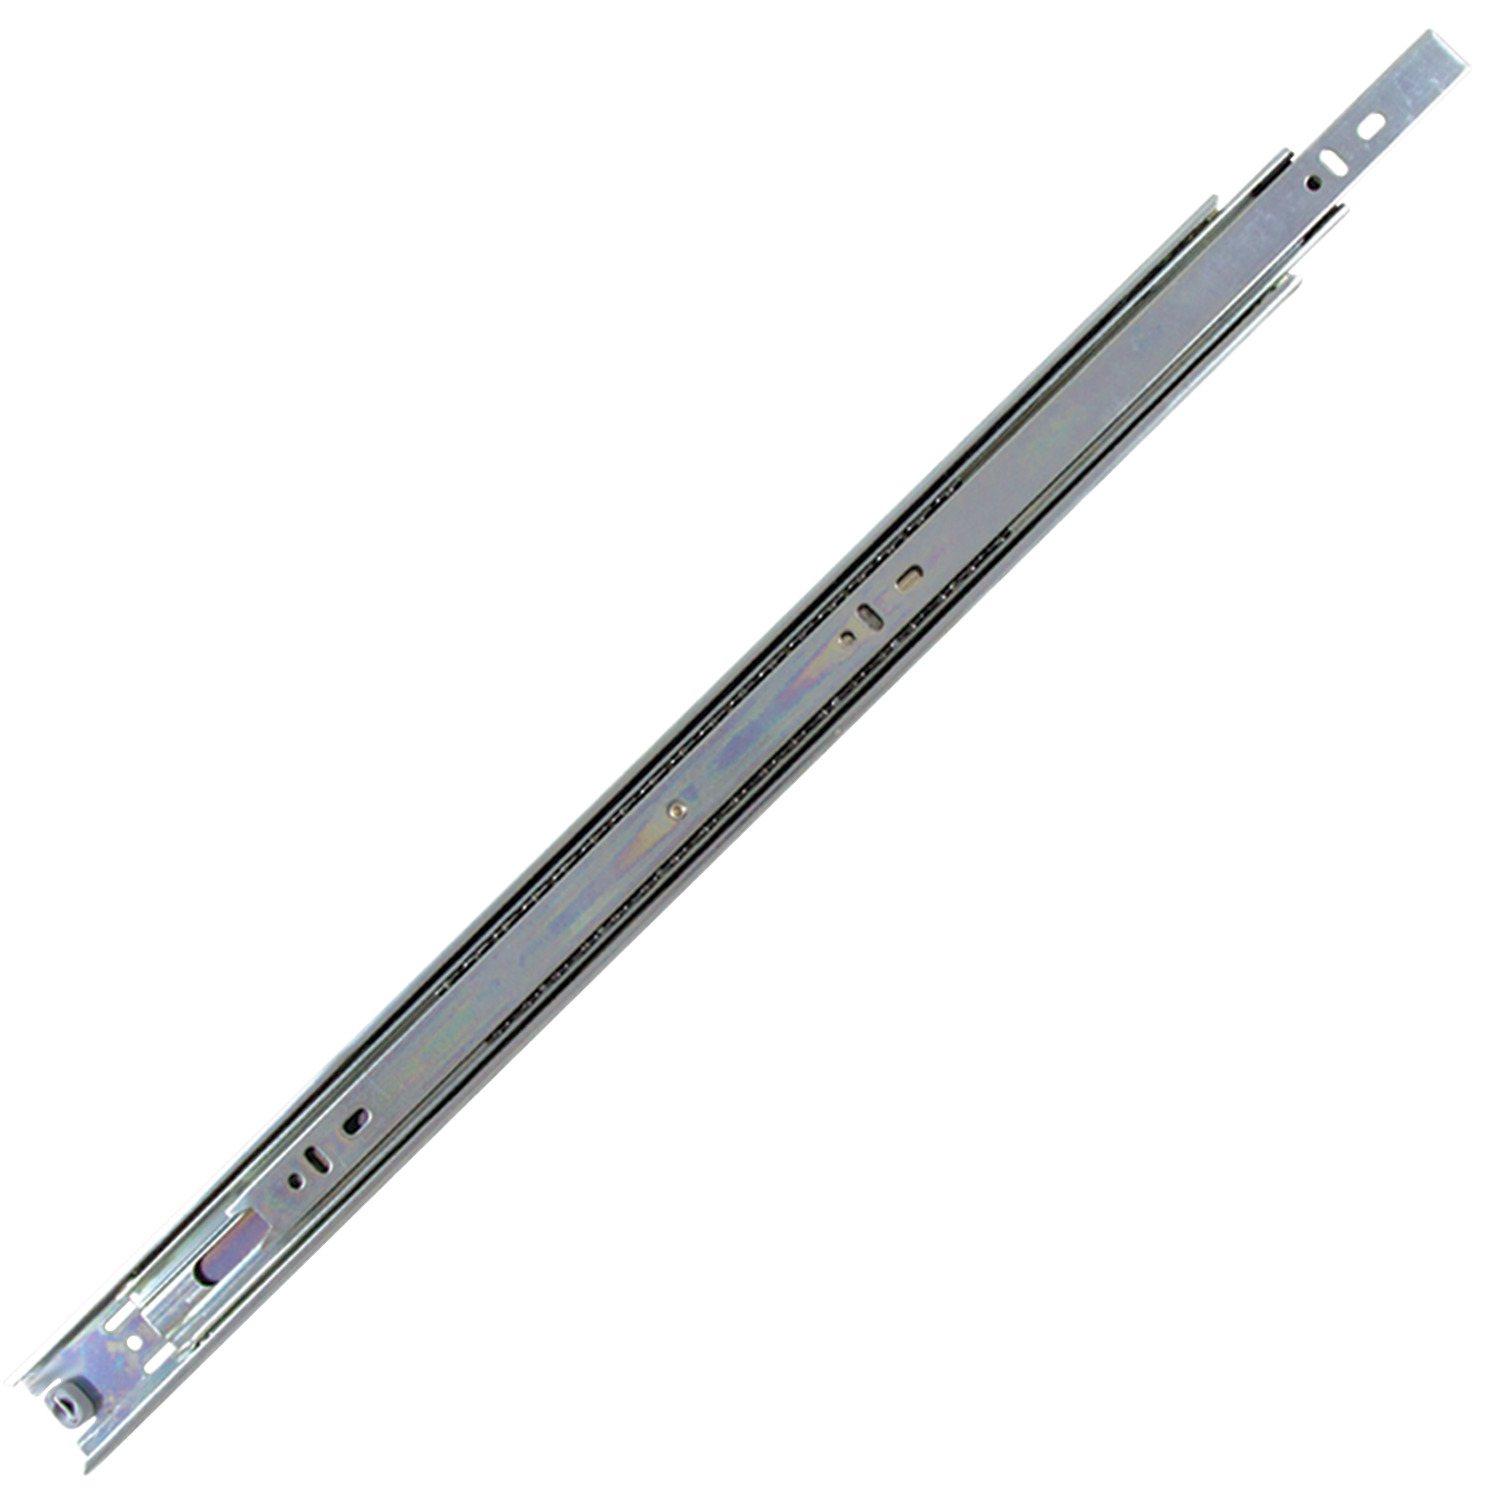 L2068.AC0250 Drawer Slide Full Extn Length 250; Load 30kg per pair. Sold Individually.